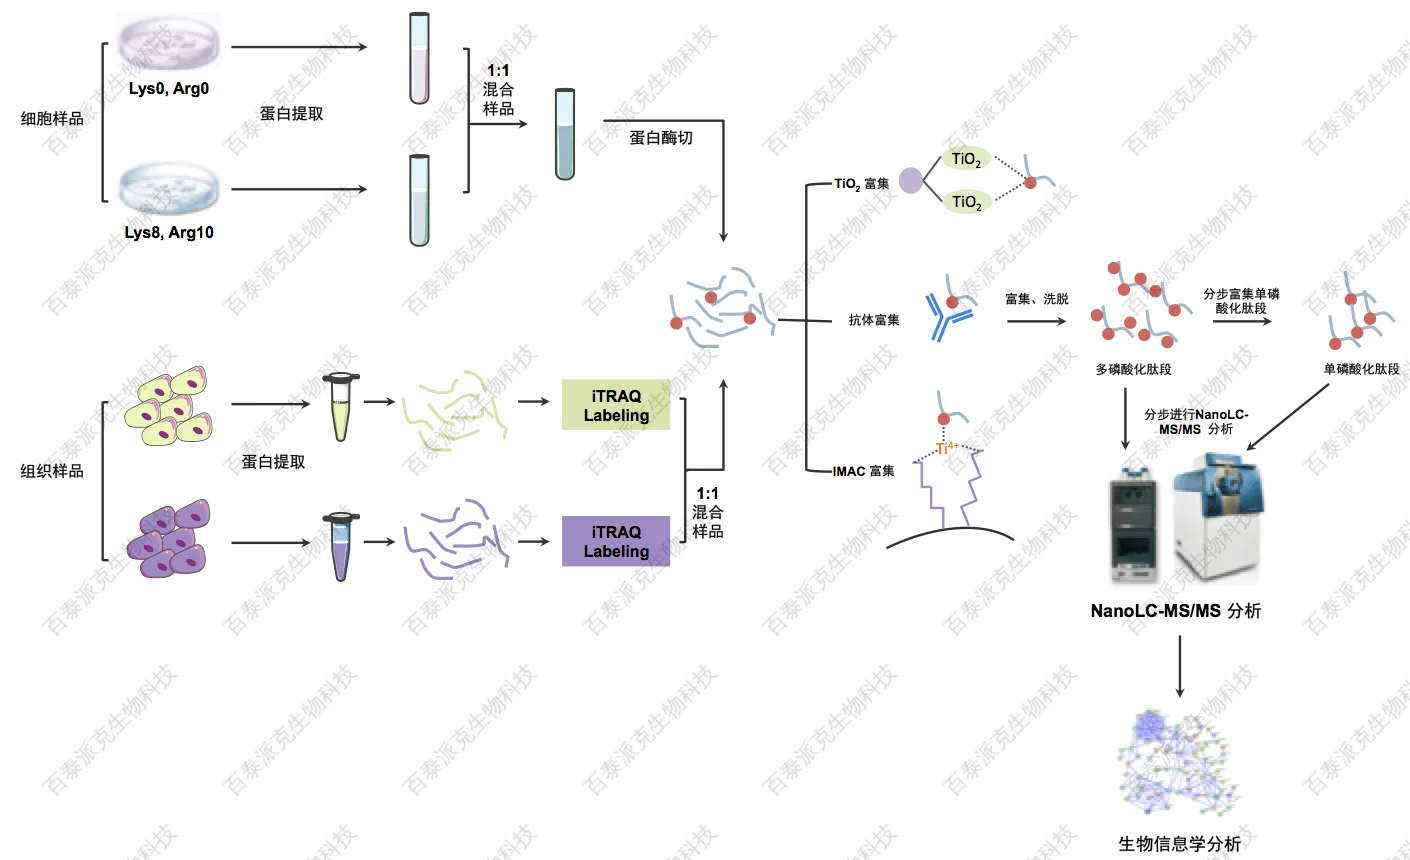 20221219-8009-image-磷酸化定量蛋白组学分析流程.png